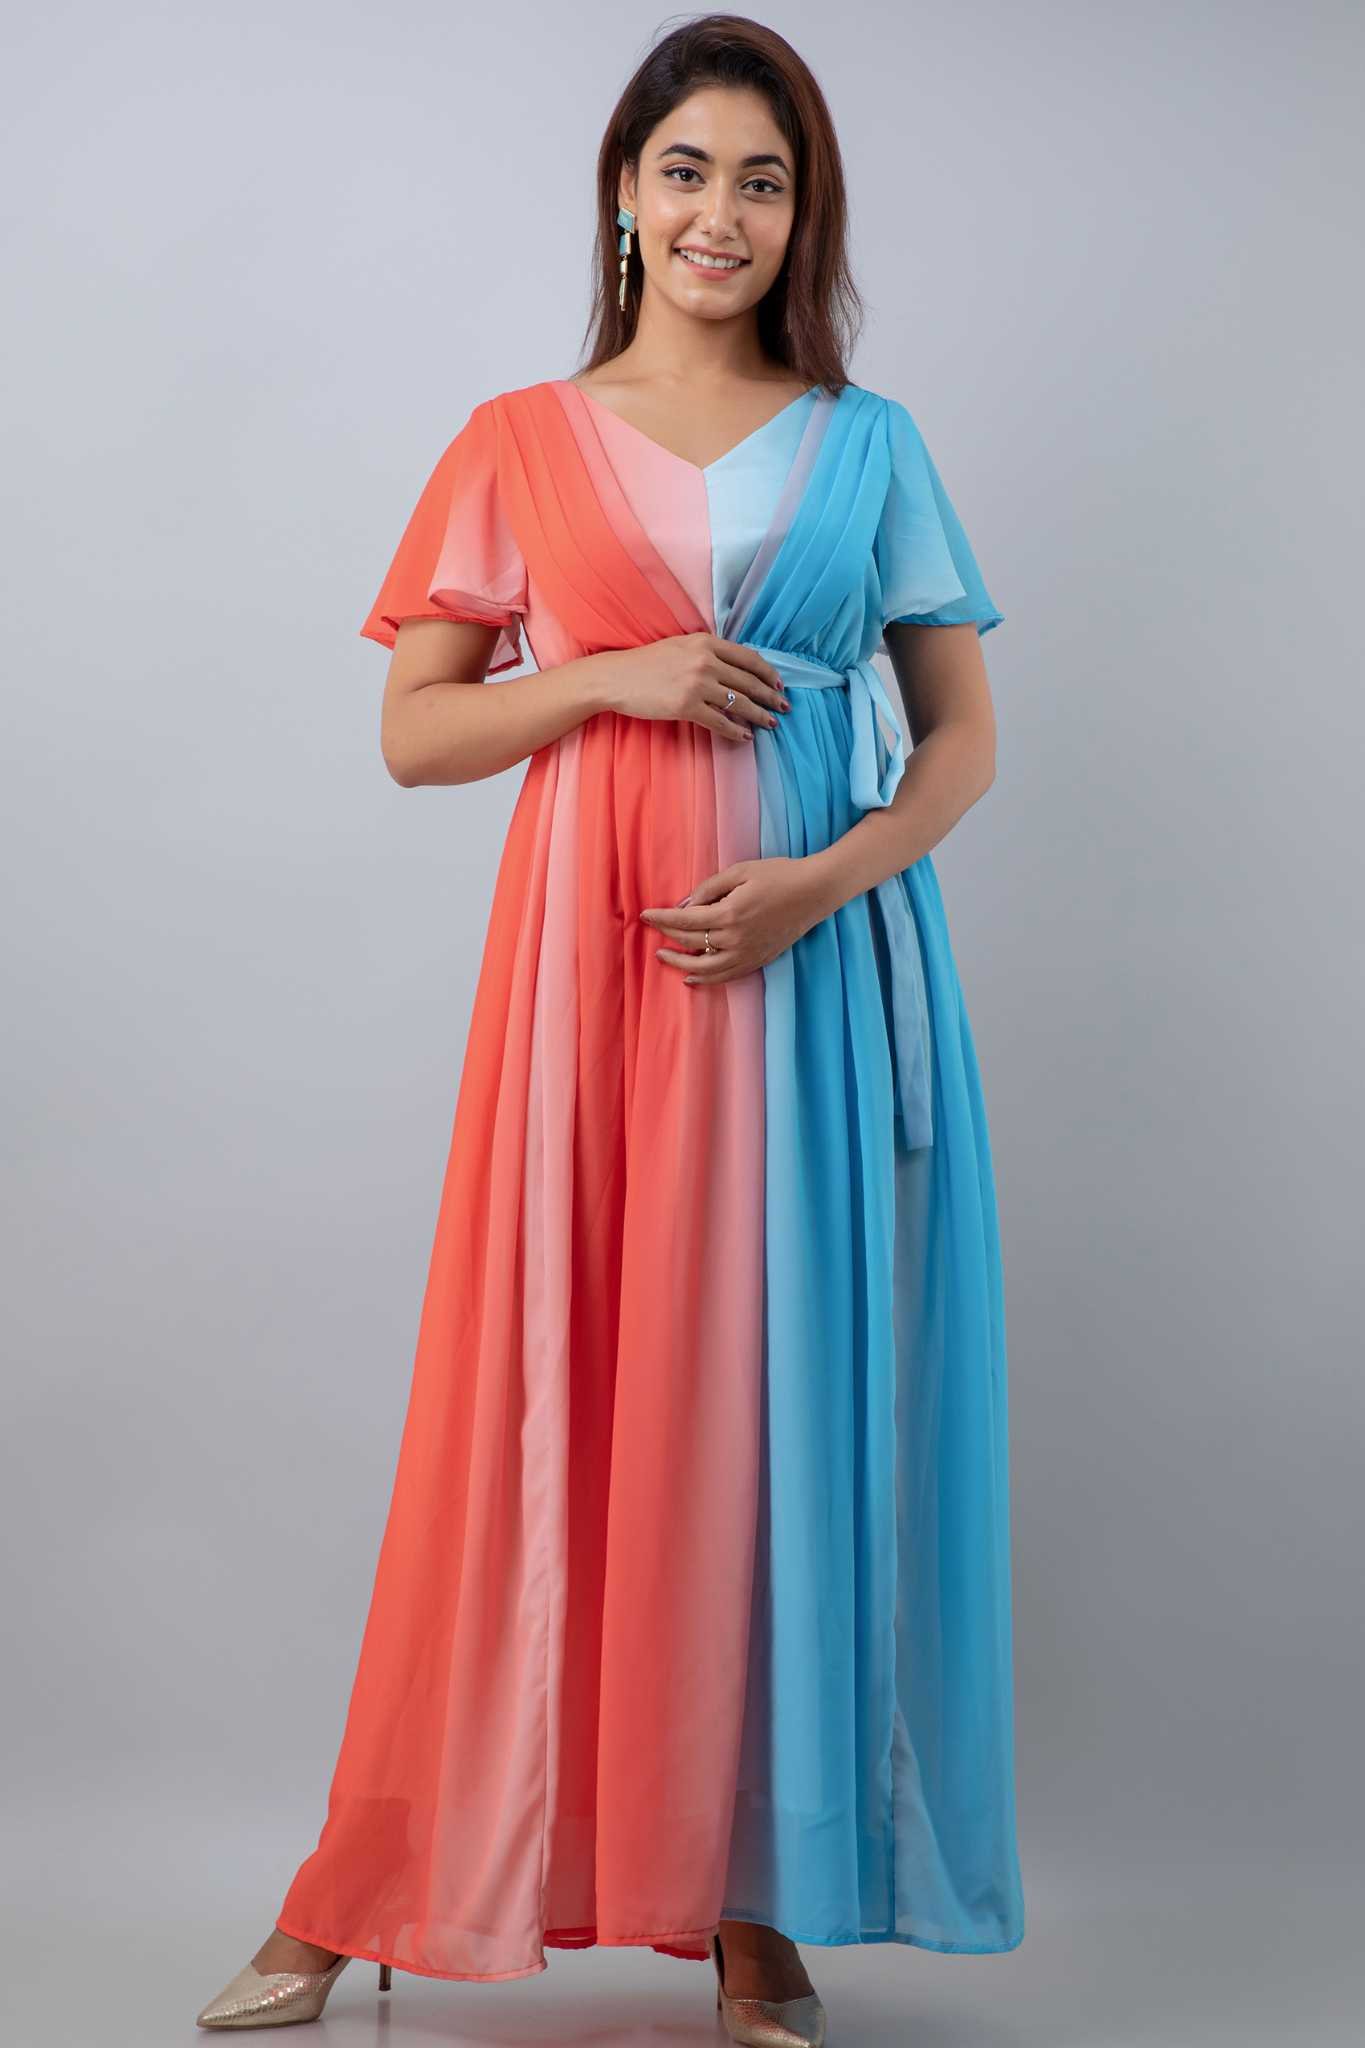 Maternity Robes, Nursing Gowns, MomToBe Caftans & Maxi Dresses